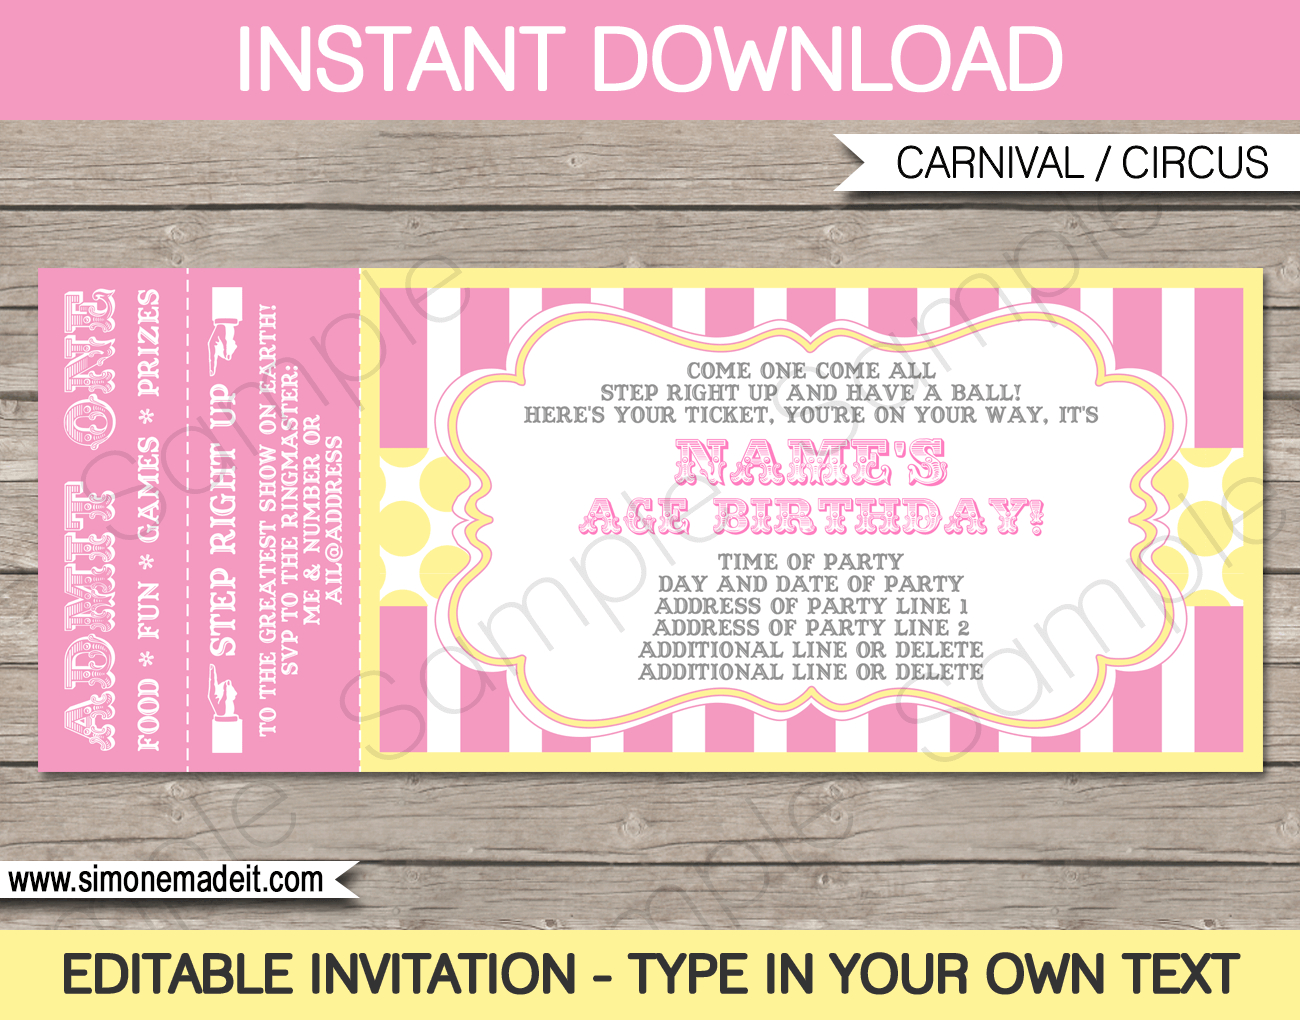 Carnival Ticket Invitation Template Pinkyellow 2 regarding dimensions 1300 X 1020